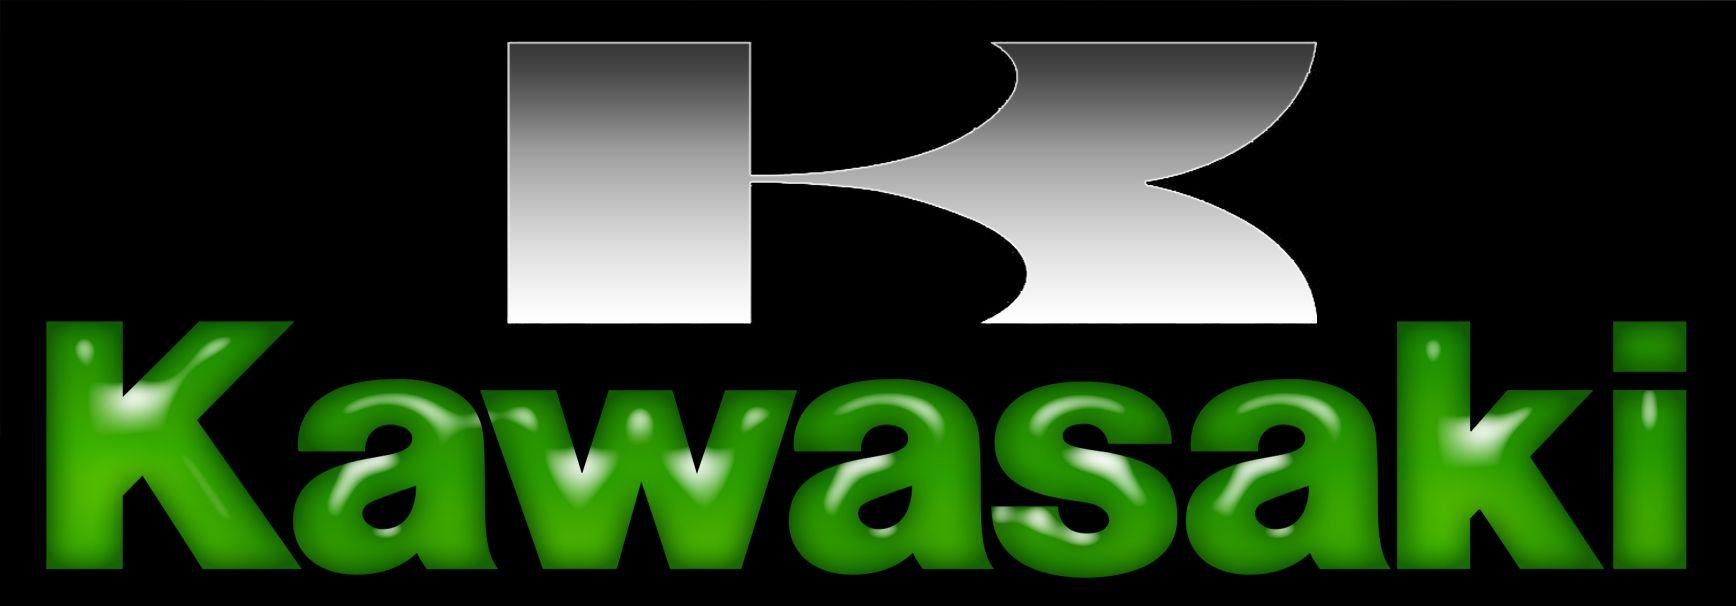 Kawasaki Logo - Kawasaki logo | Motorcycle brands: logo, specs, history.